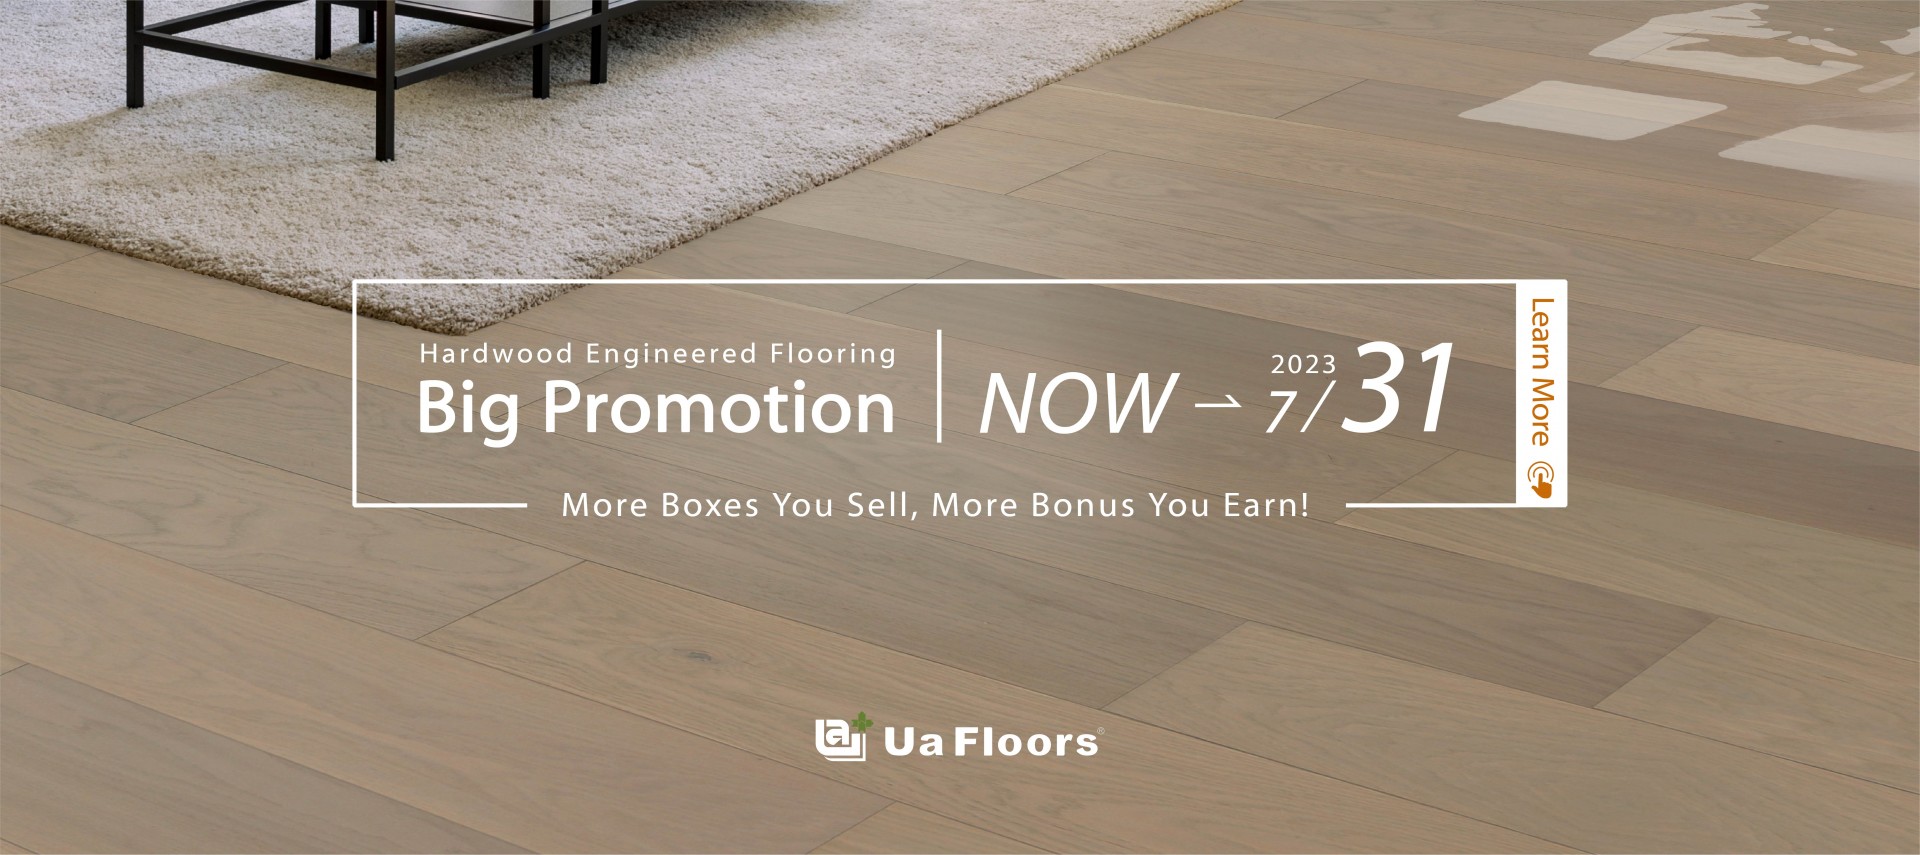 Ua Floors - ABOUT US|Big Retail Campaign Promotion